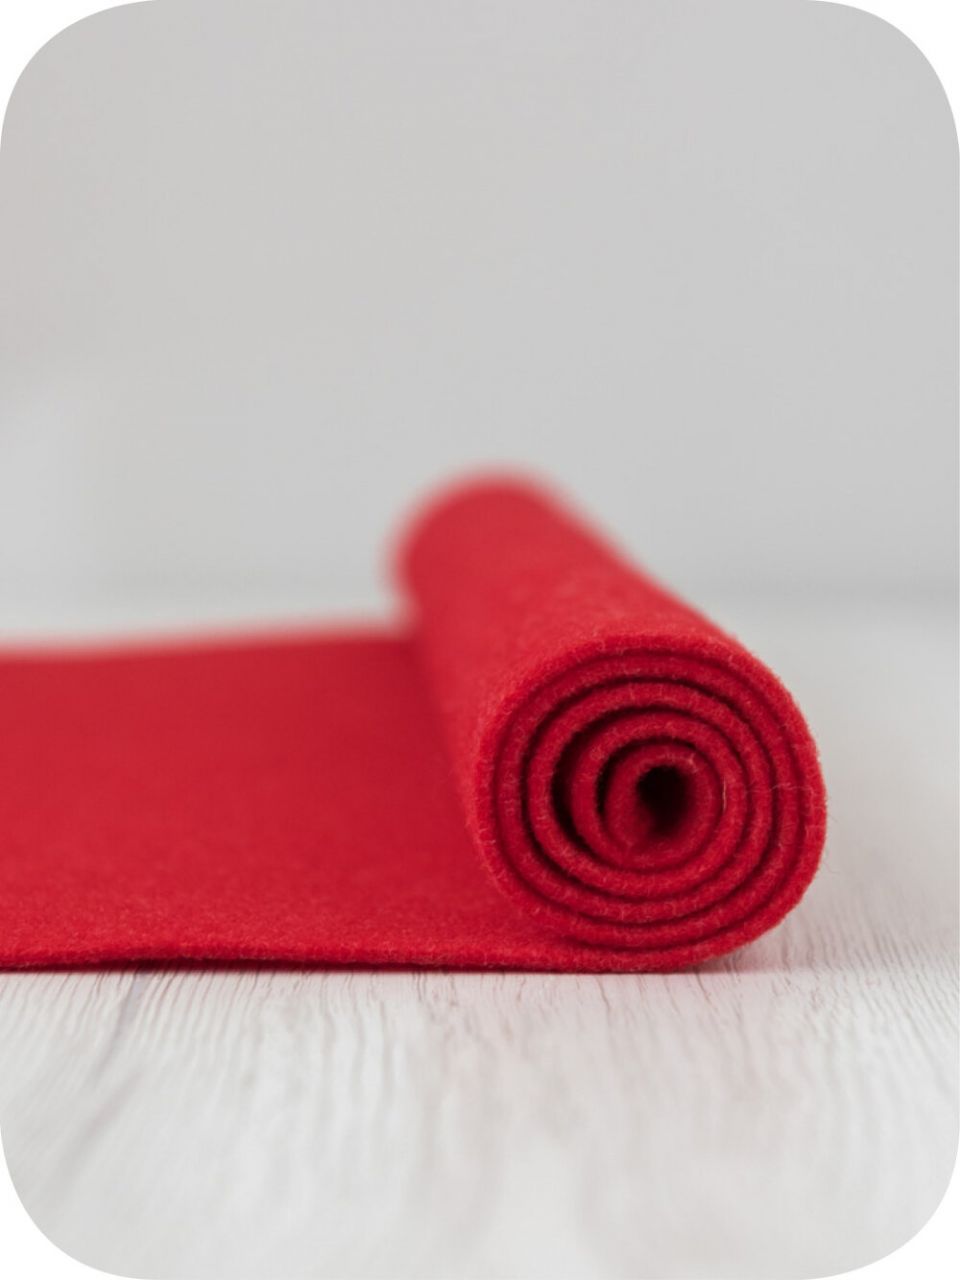 RED CARPET /Vörös szőnyeg/ Gyapjúfilc